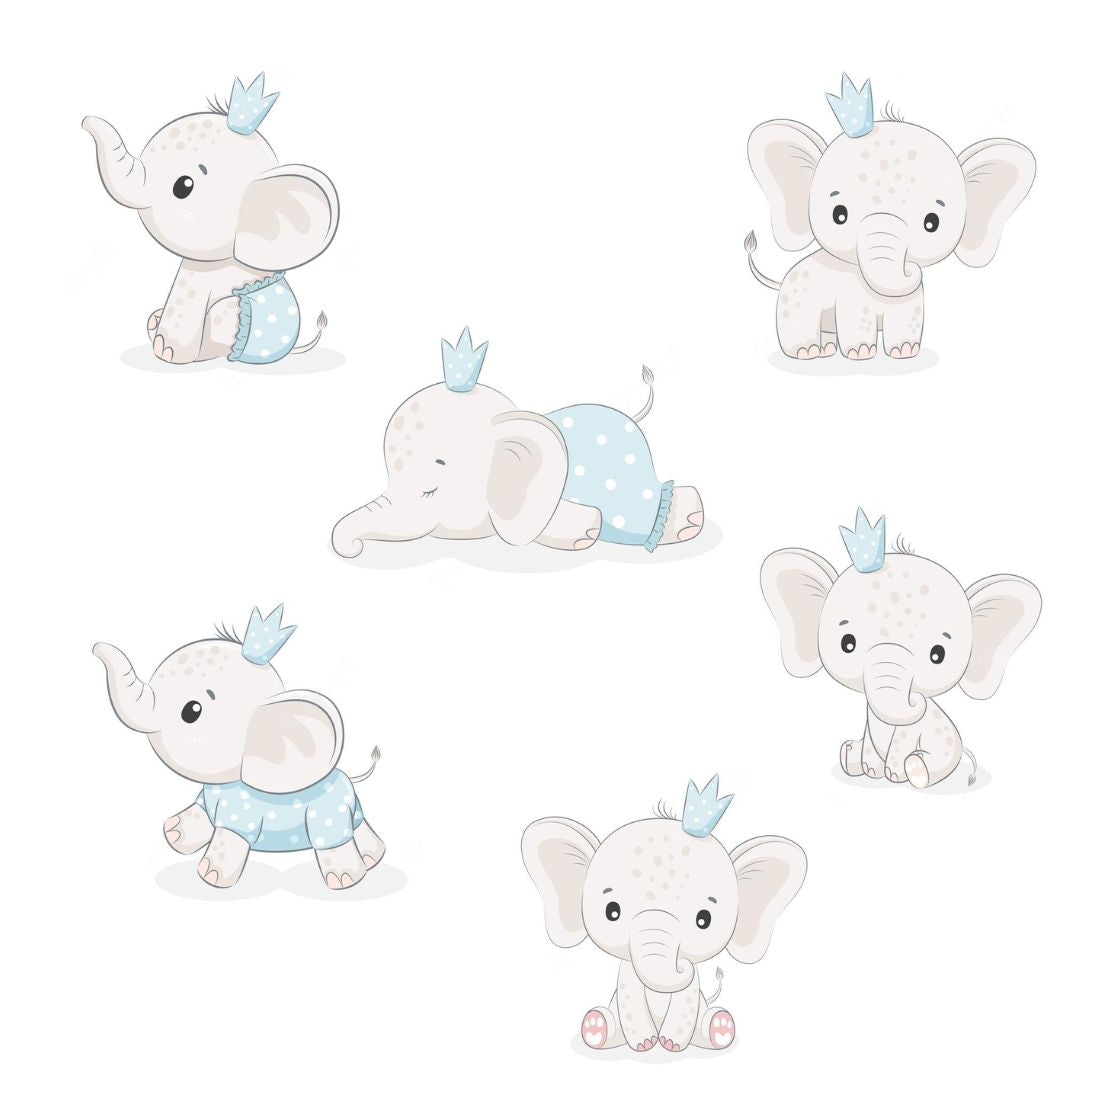 Baby Elephant Boy Cut Outs (12 Pcs)